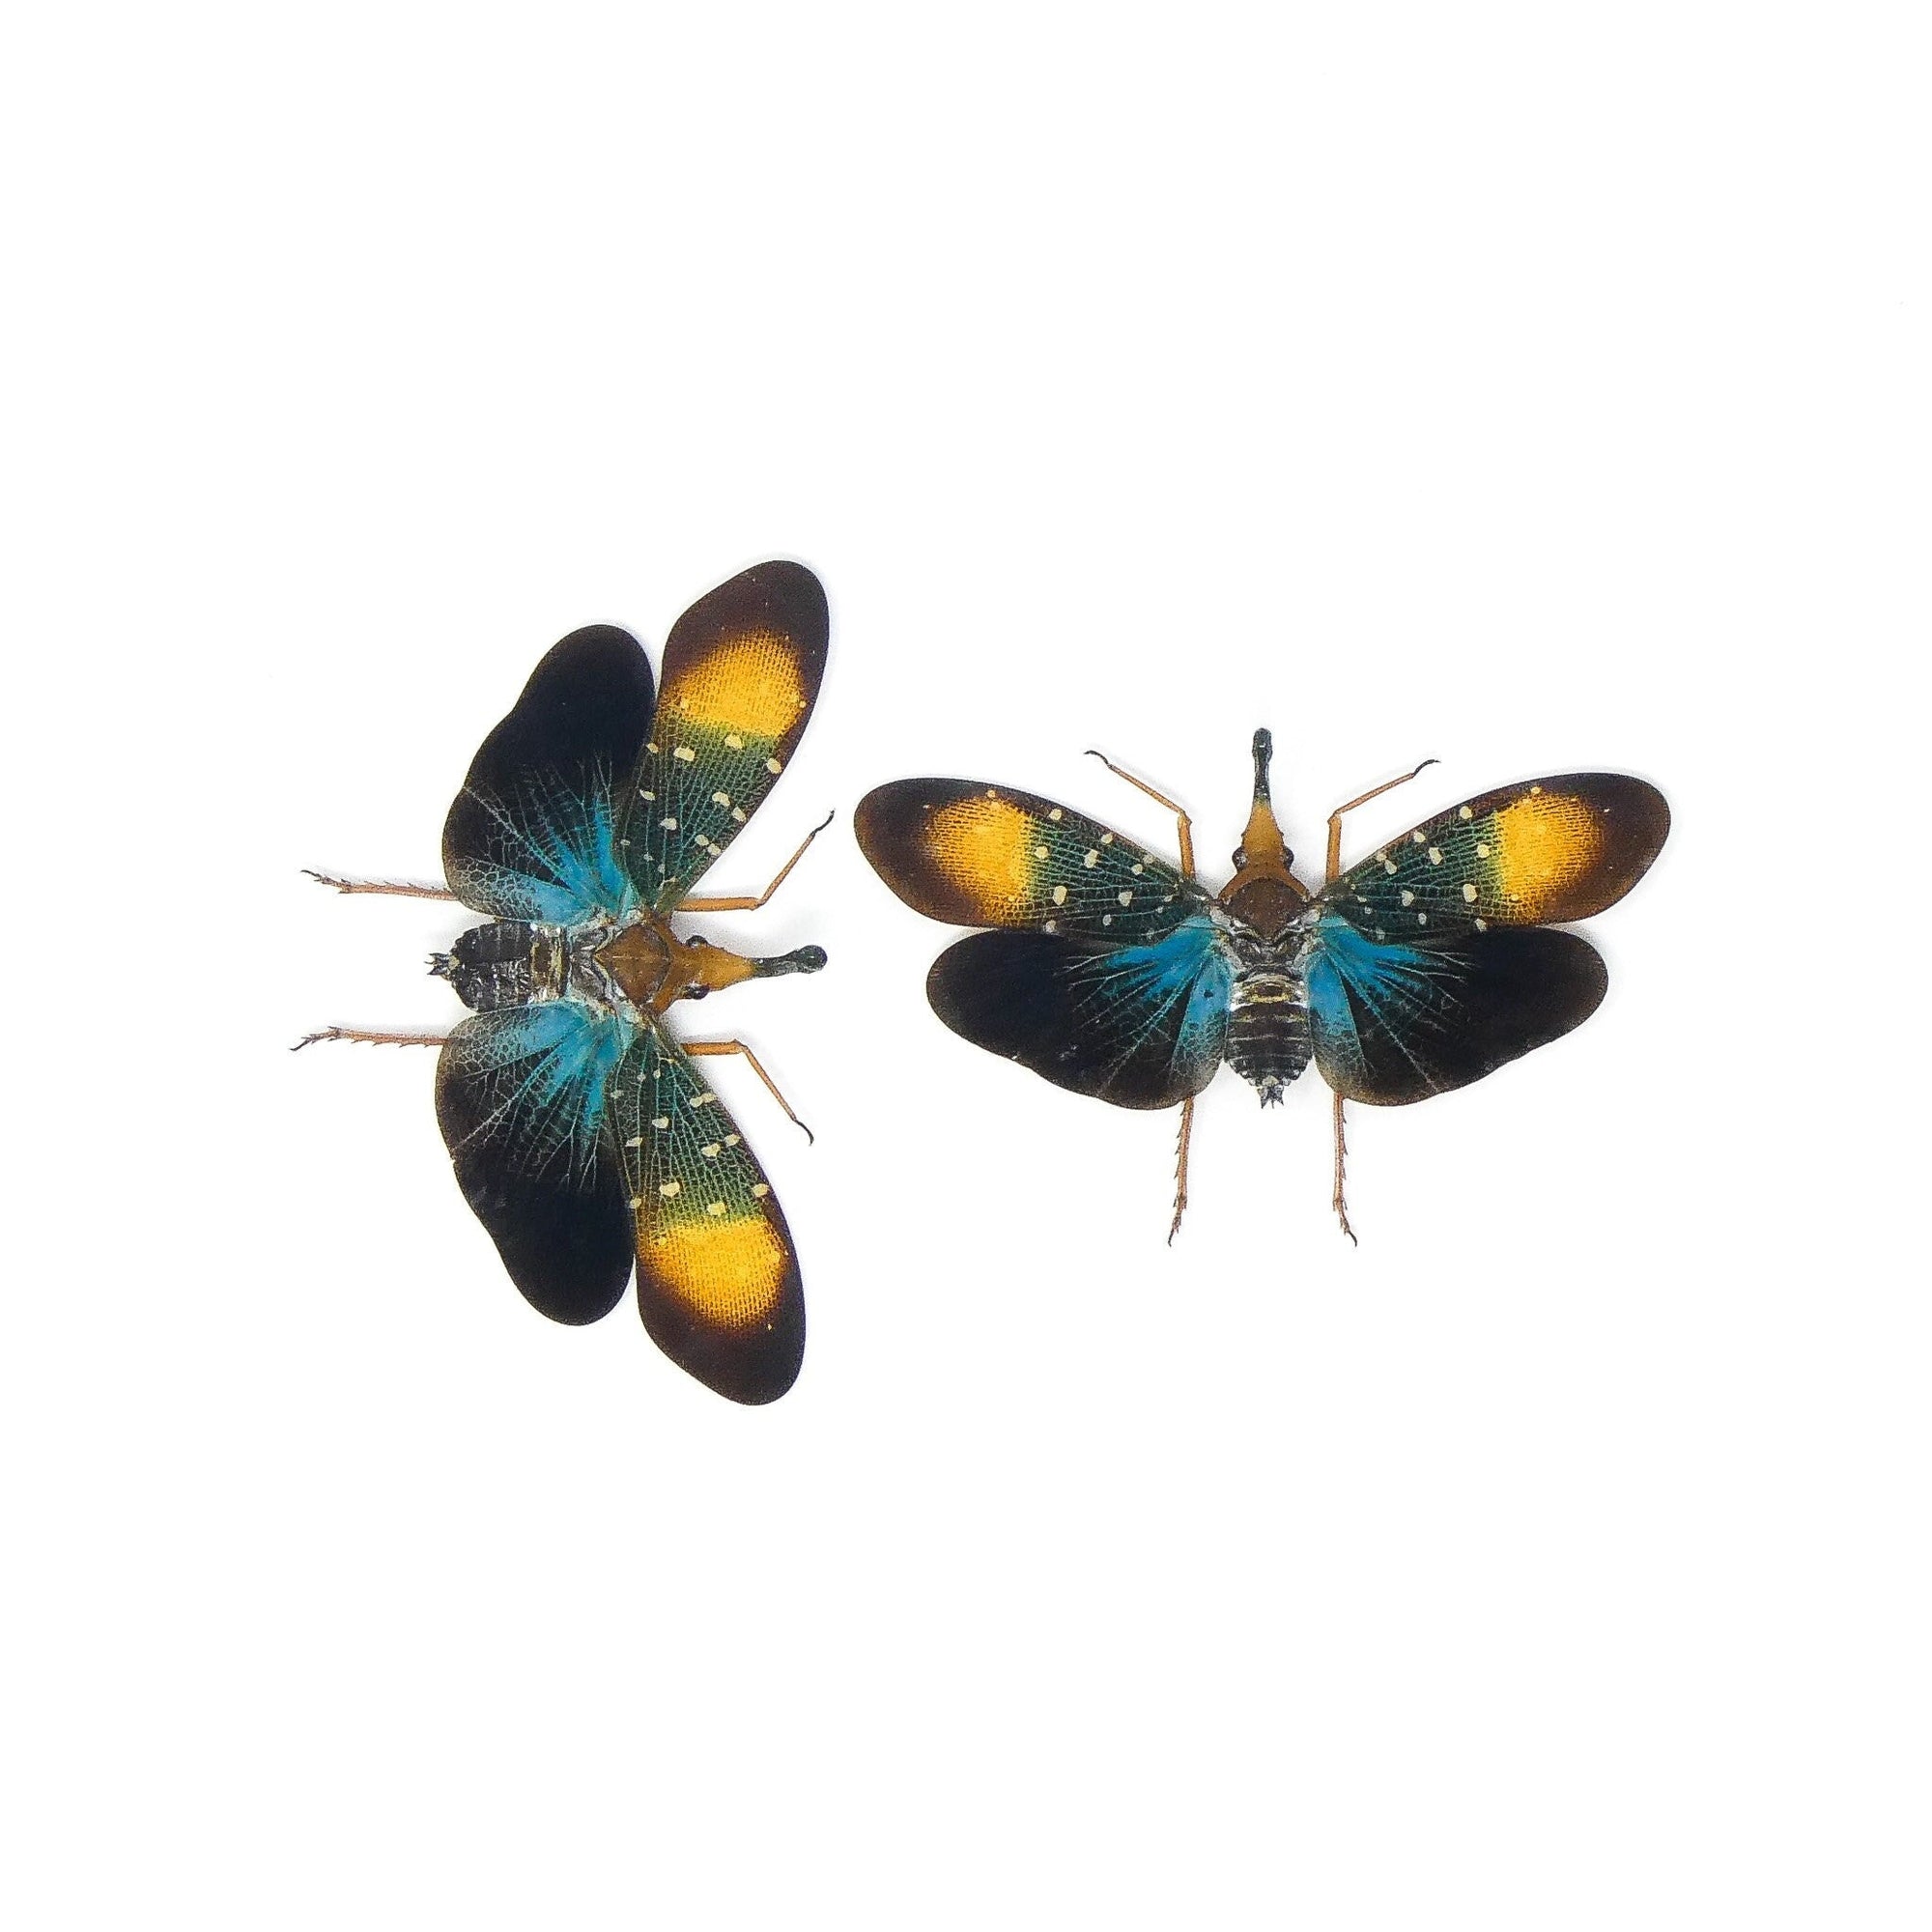 Two (2) Lantern Bugs, Pyrops gunjii (Spread) A1 Ethically Sourced Entomology Pyrops Specimens